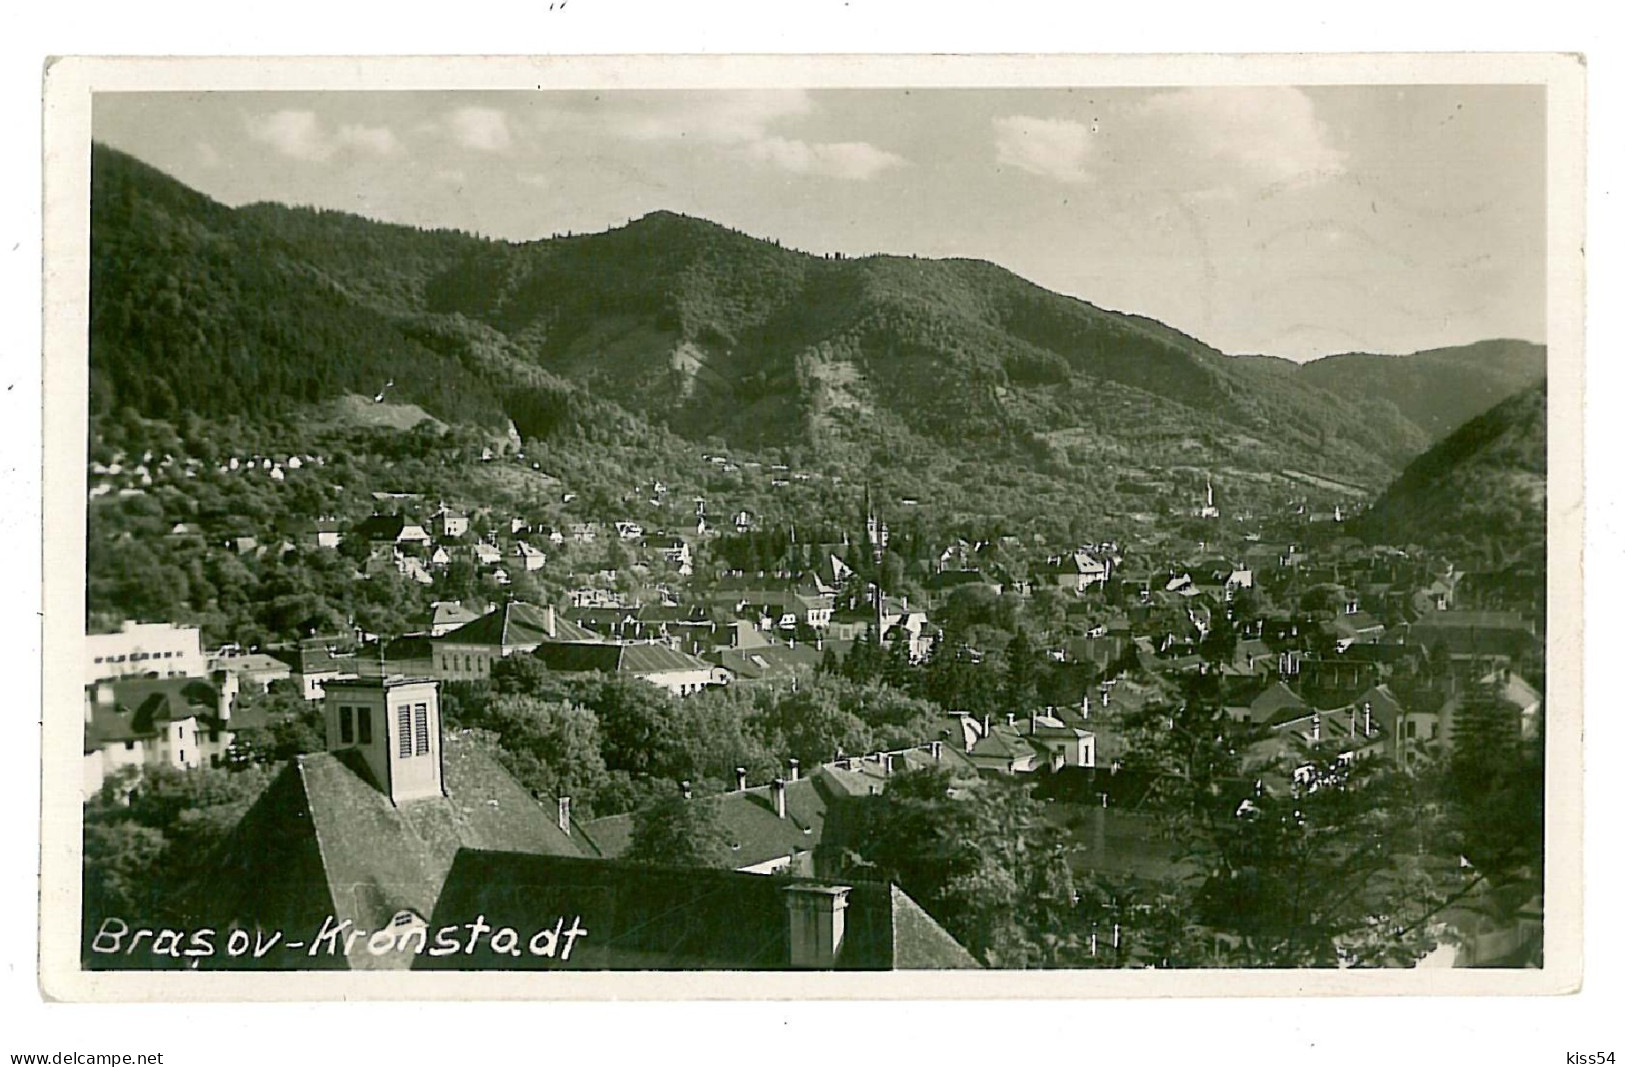 RO 33 - 4453 BRASOV, Panorama, Romania - Old Postcard, Real PHOTO - Used - 1939 - Rumänien